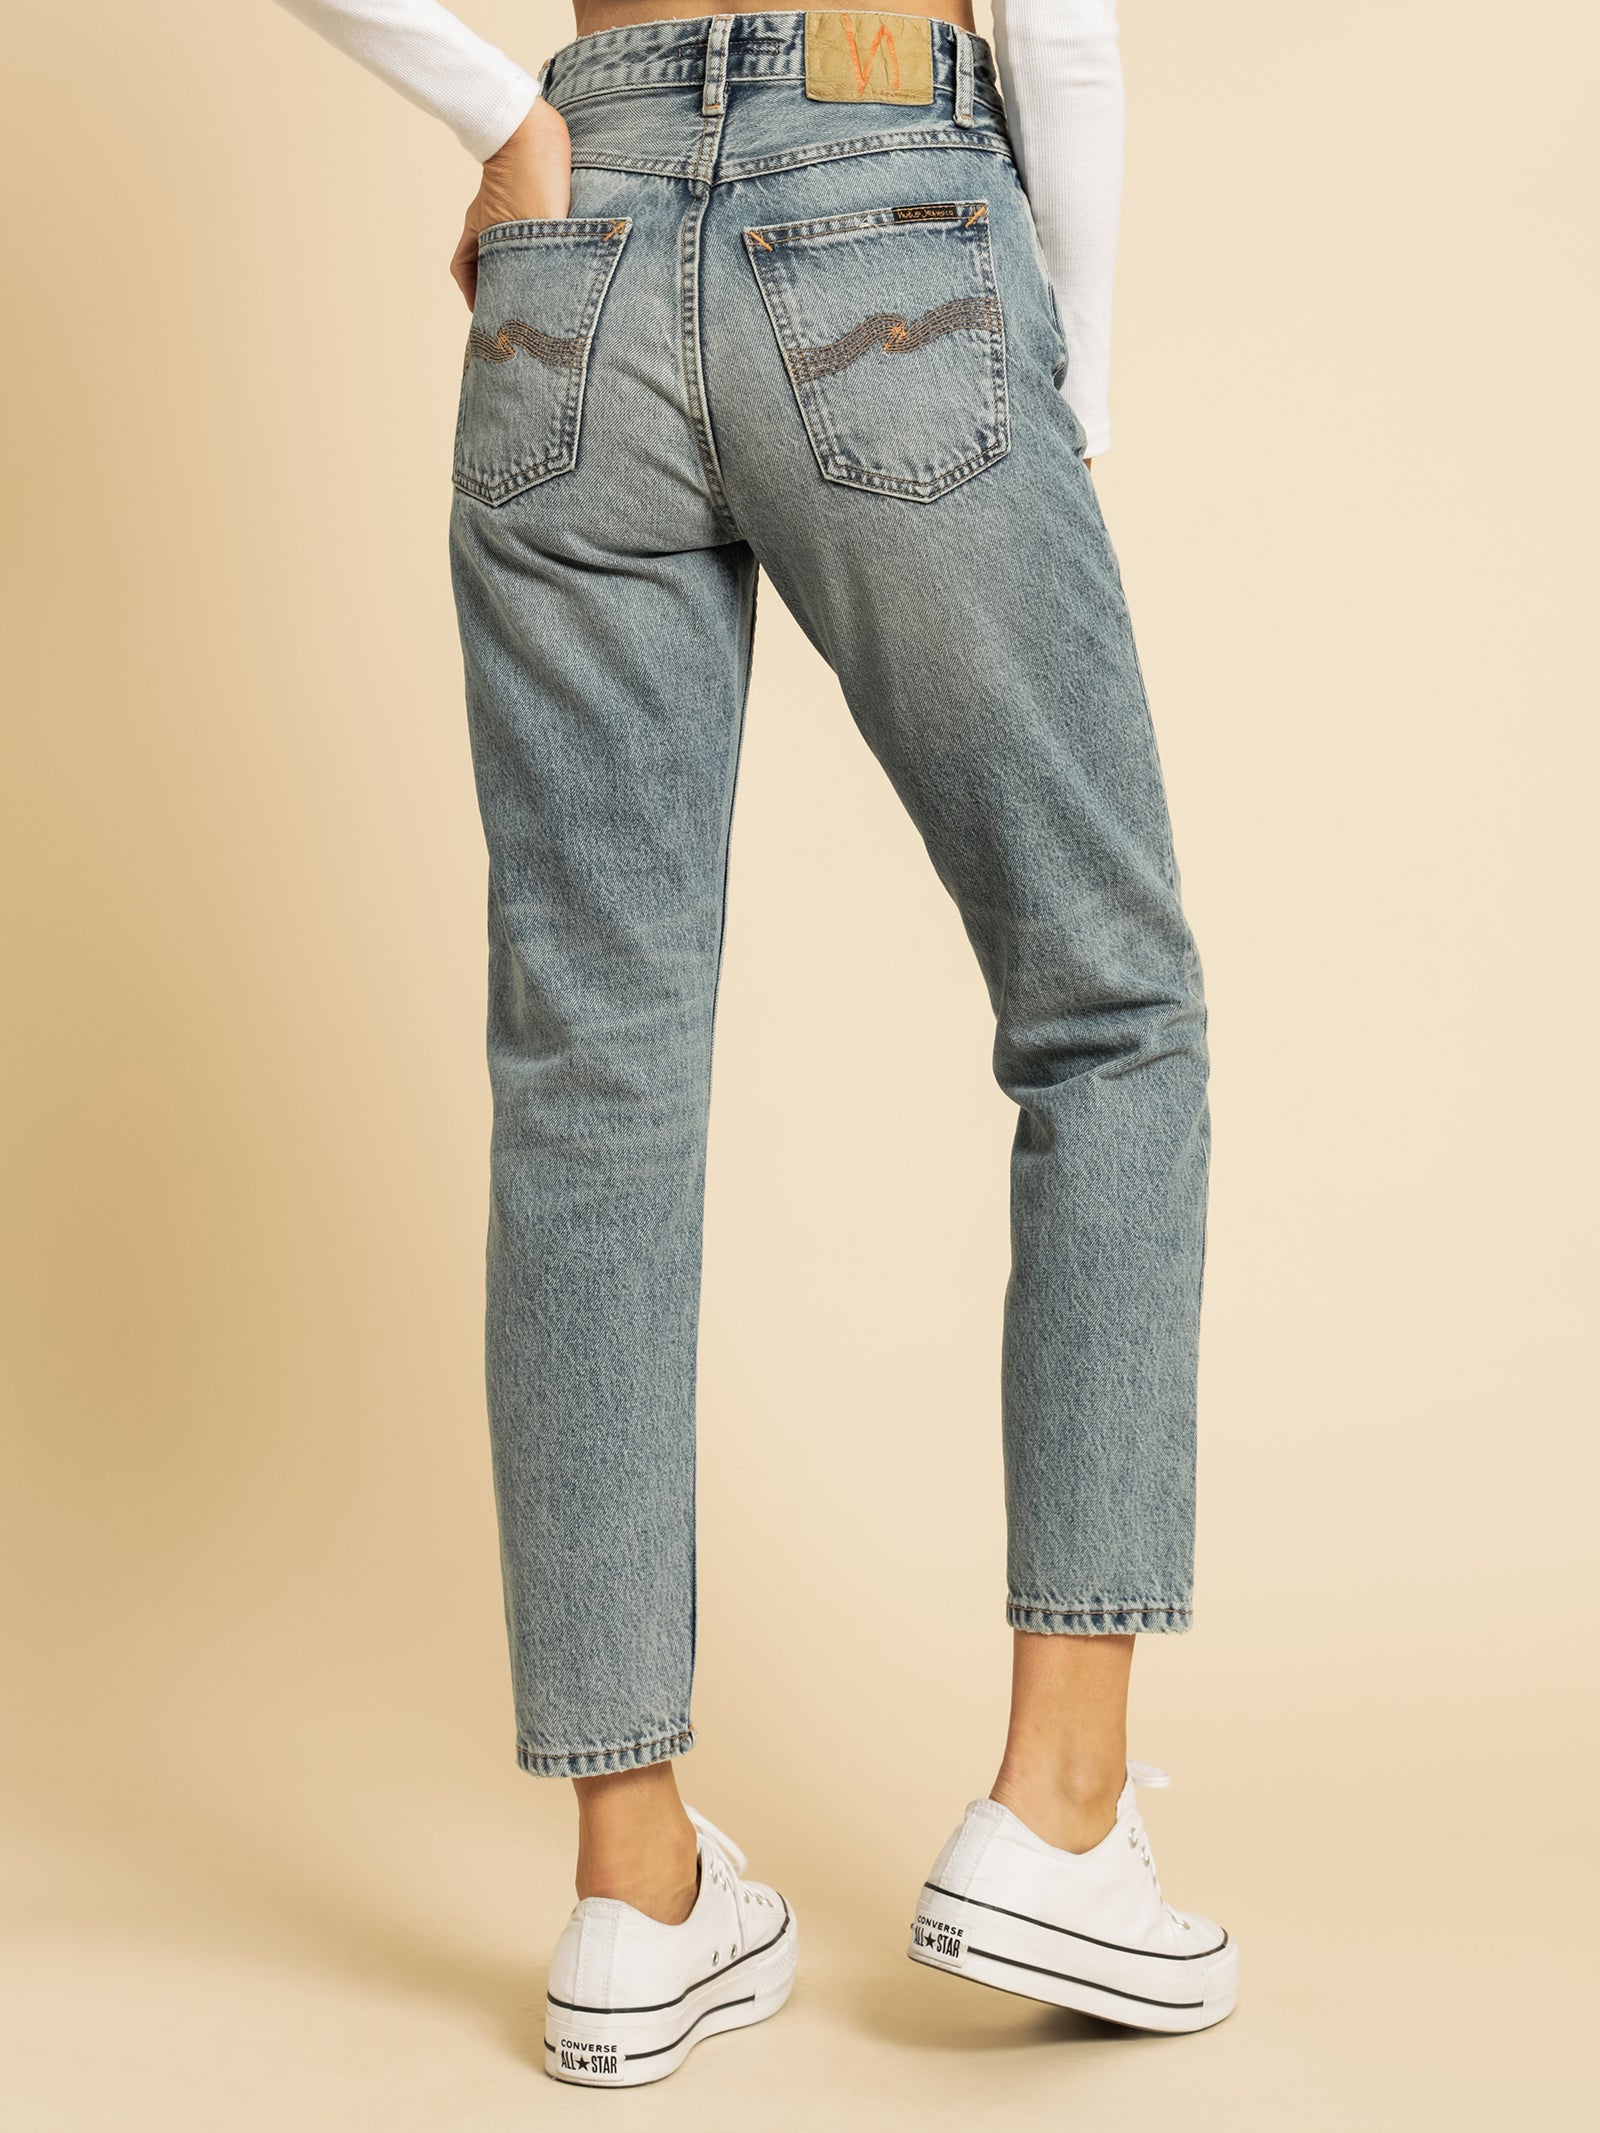 Breezy Britt Slim Jeans in Light Depo - Glue Store